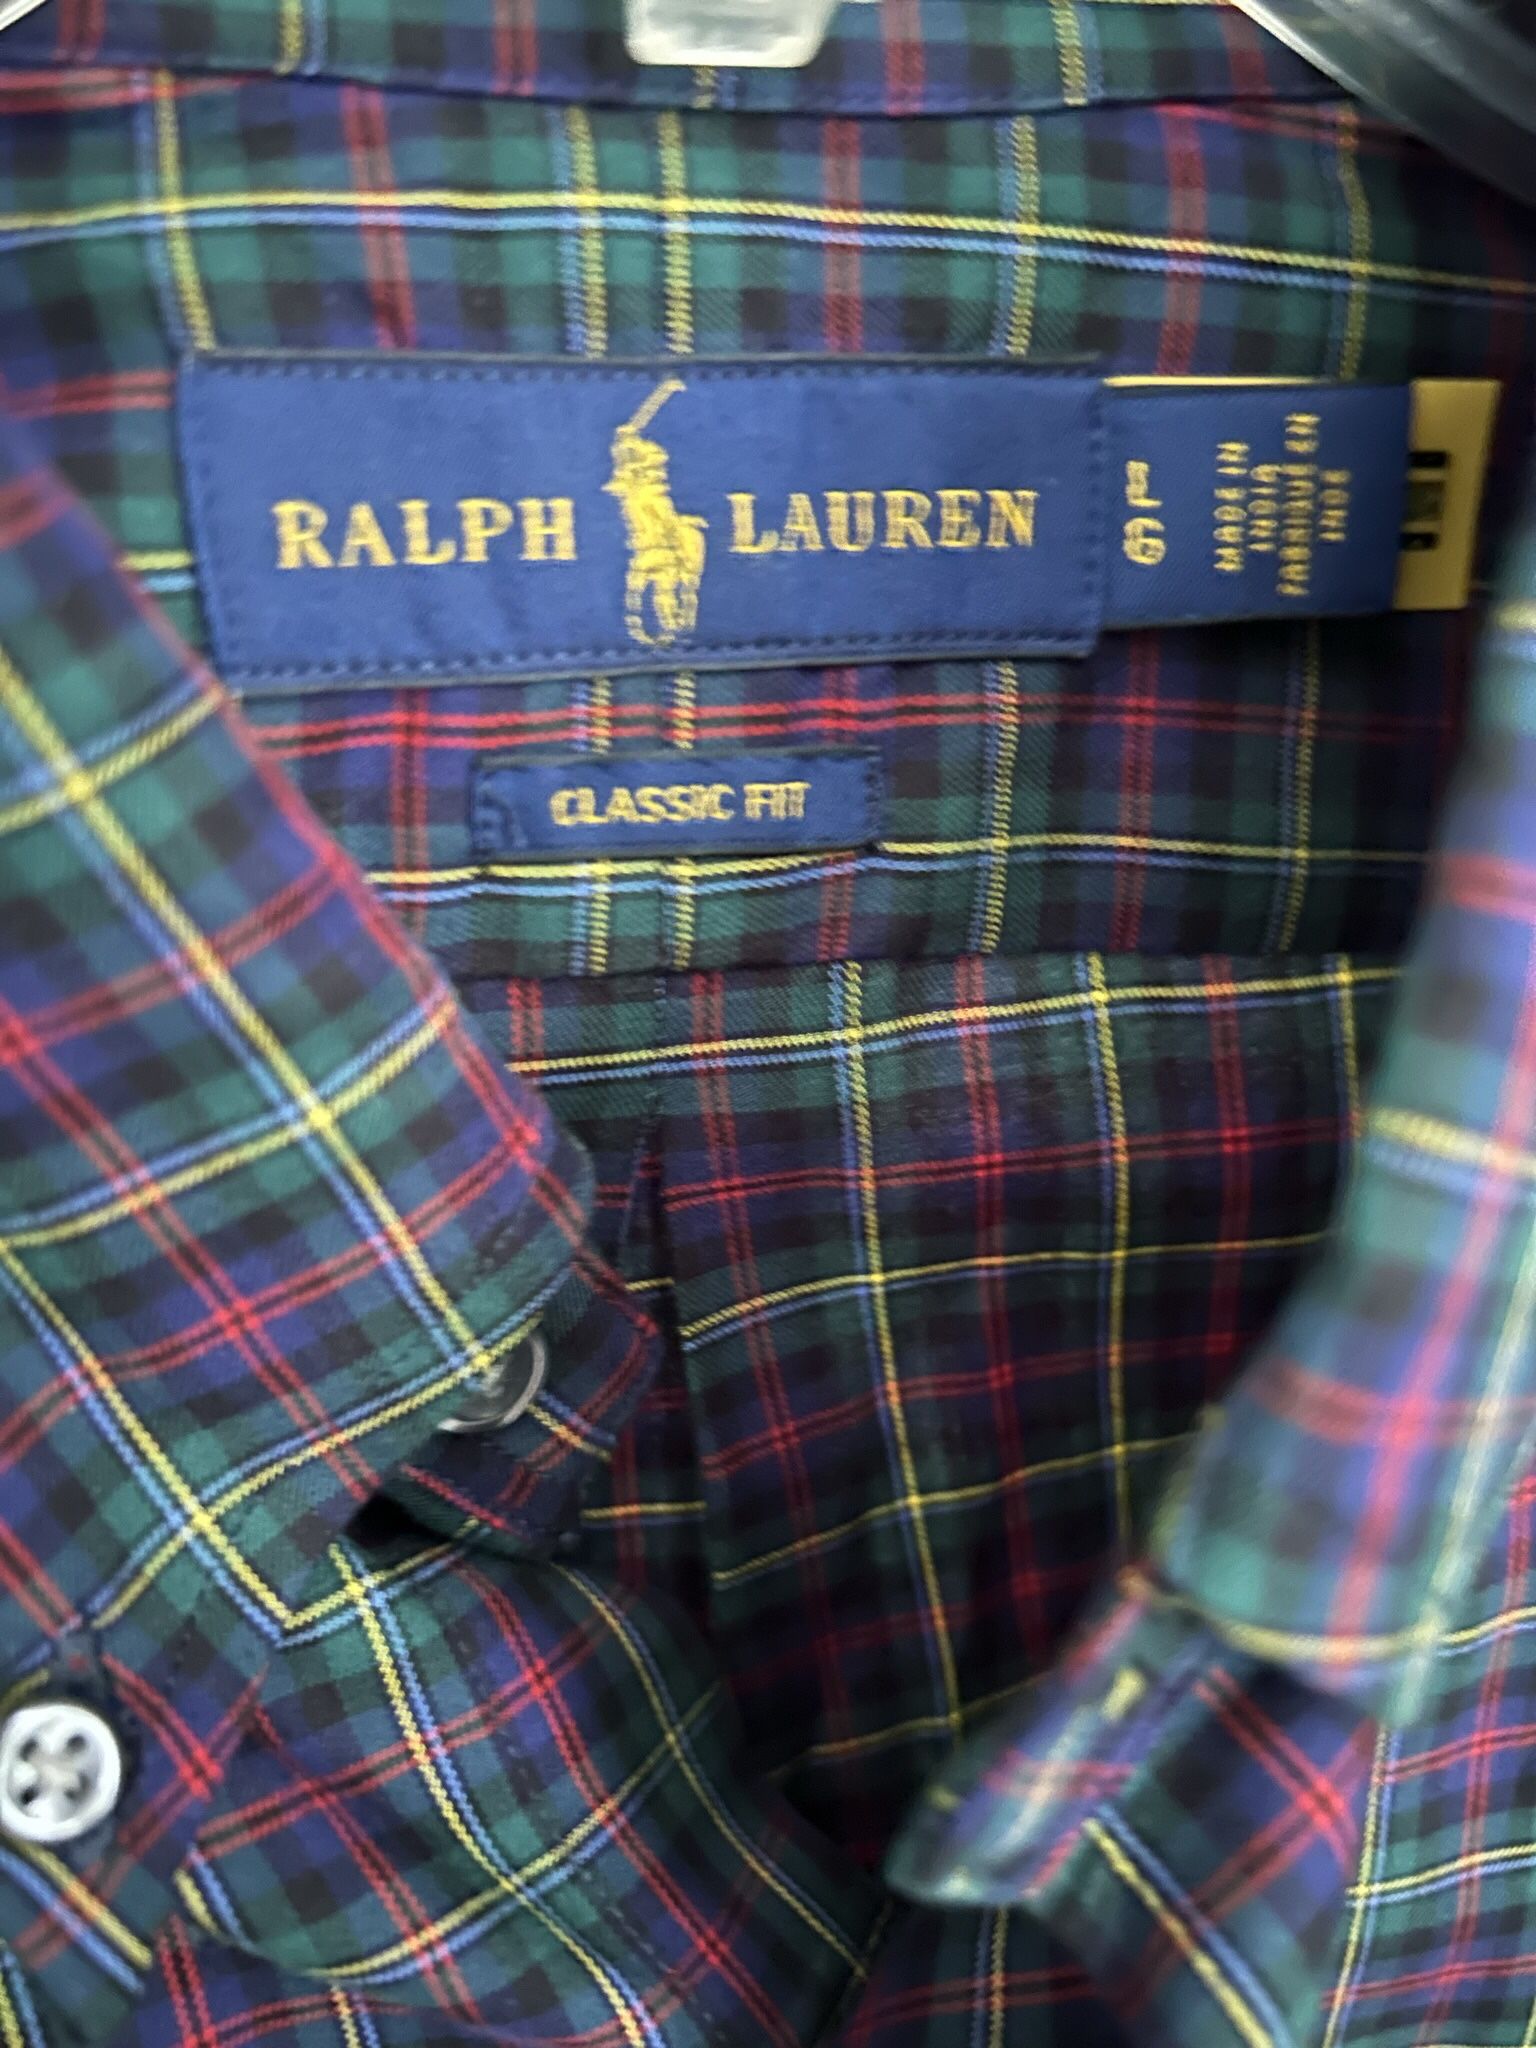 Ralph Lauren Men’s Shirt